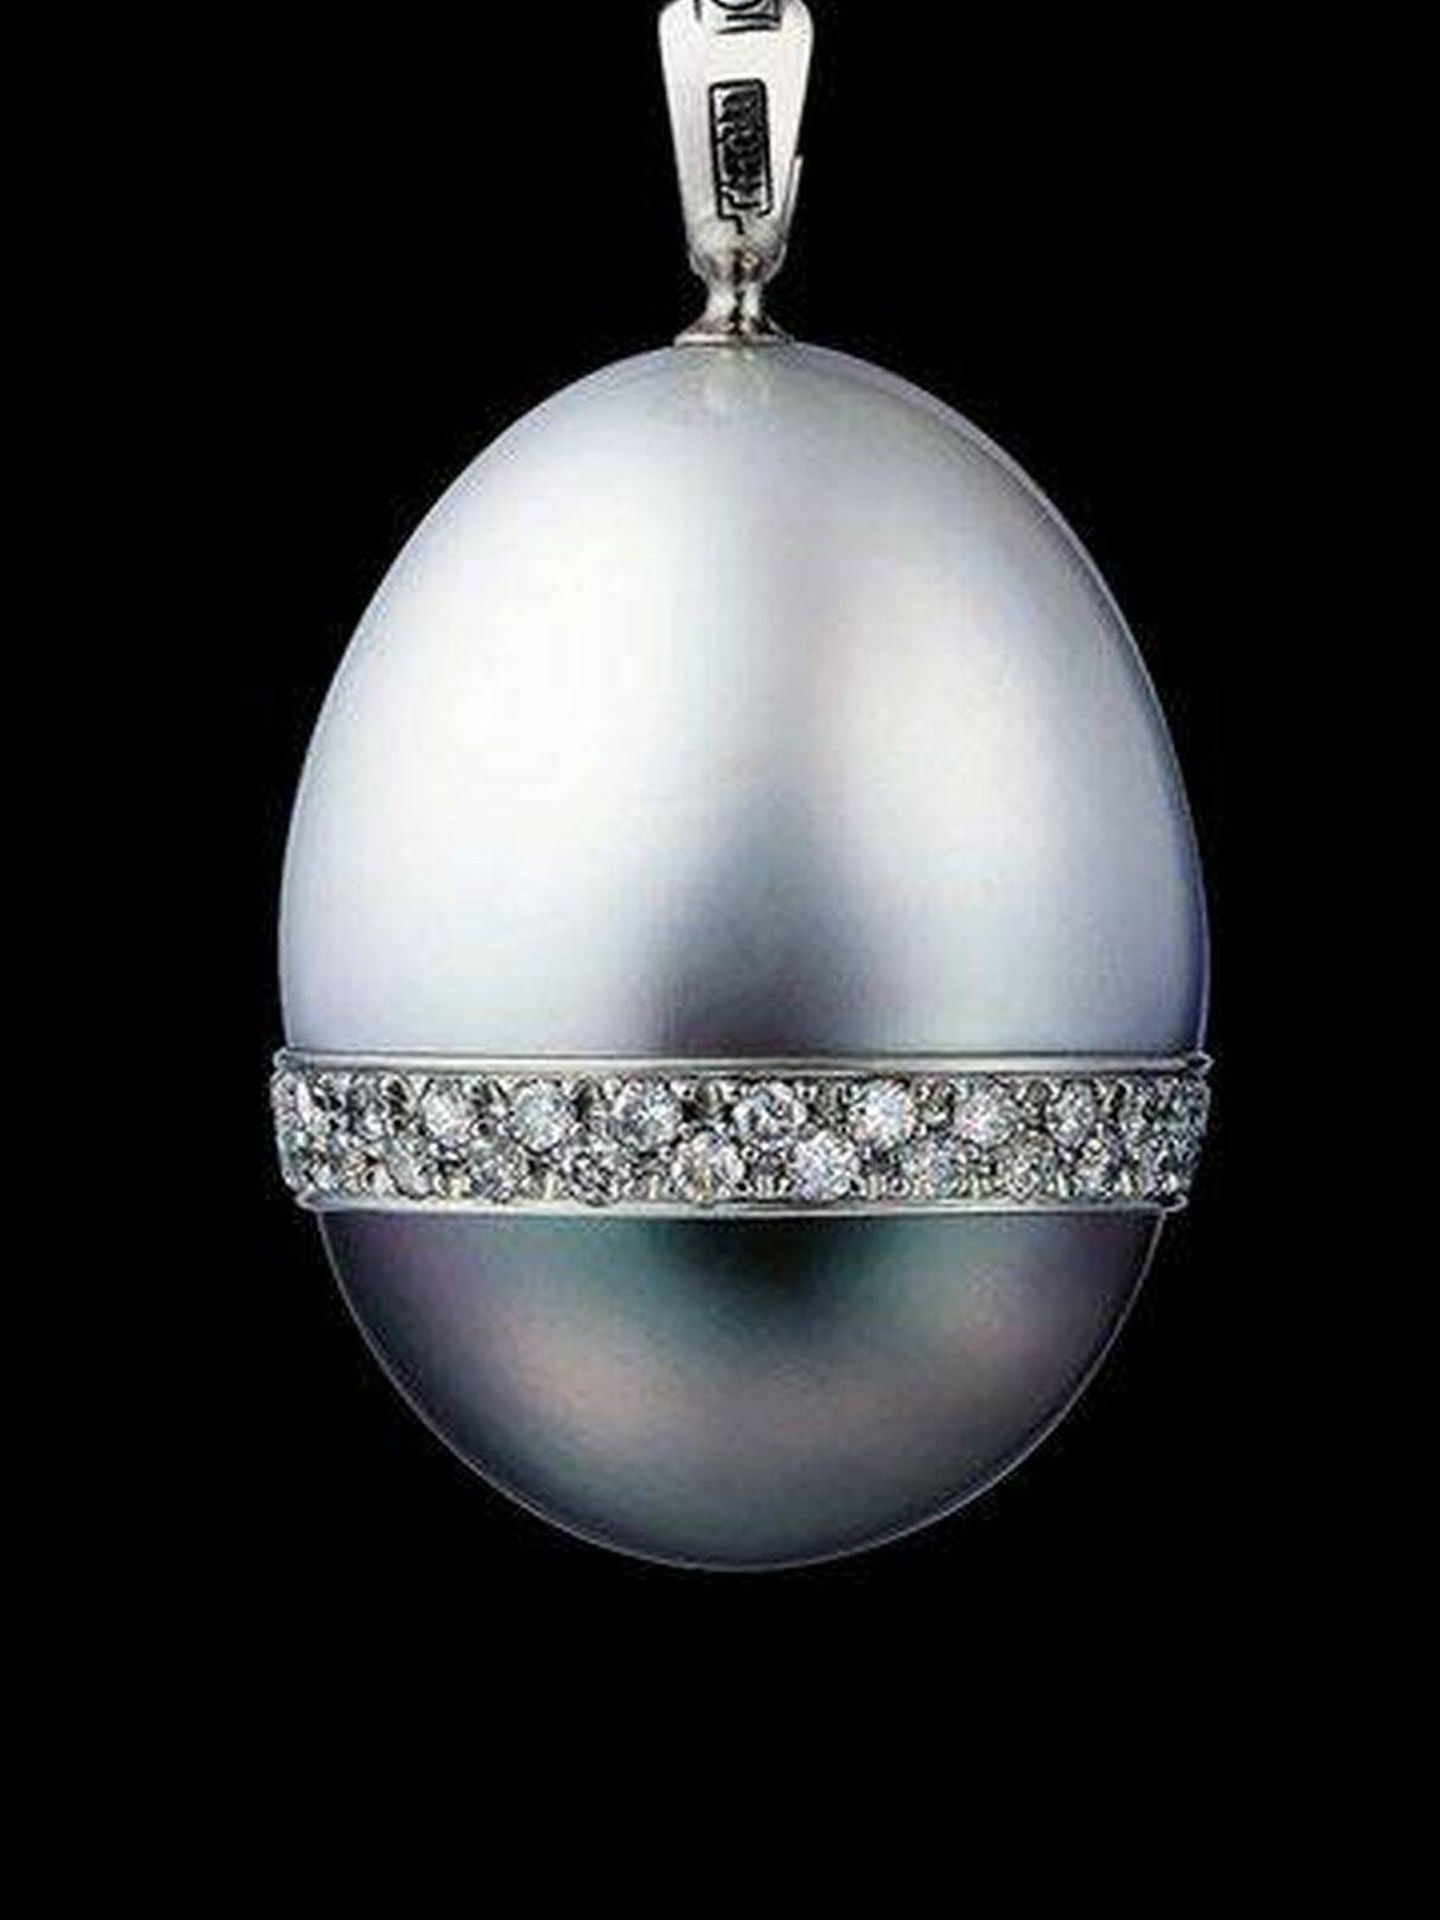 El huevo de Pascua de la reina Letizia. 